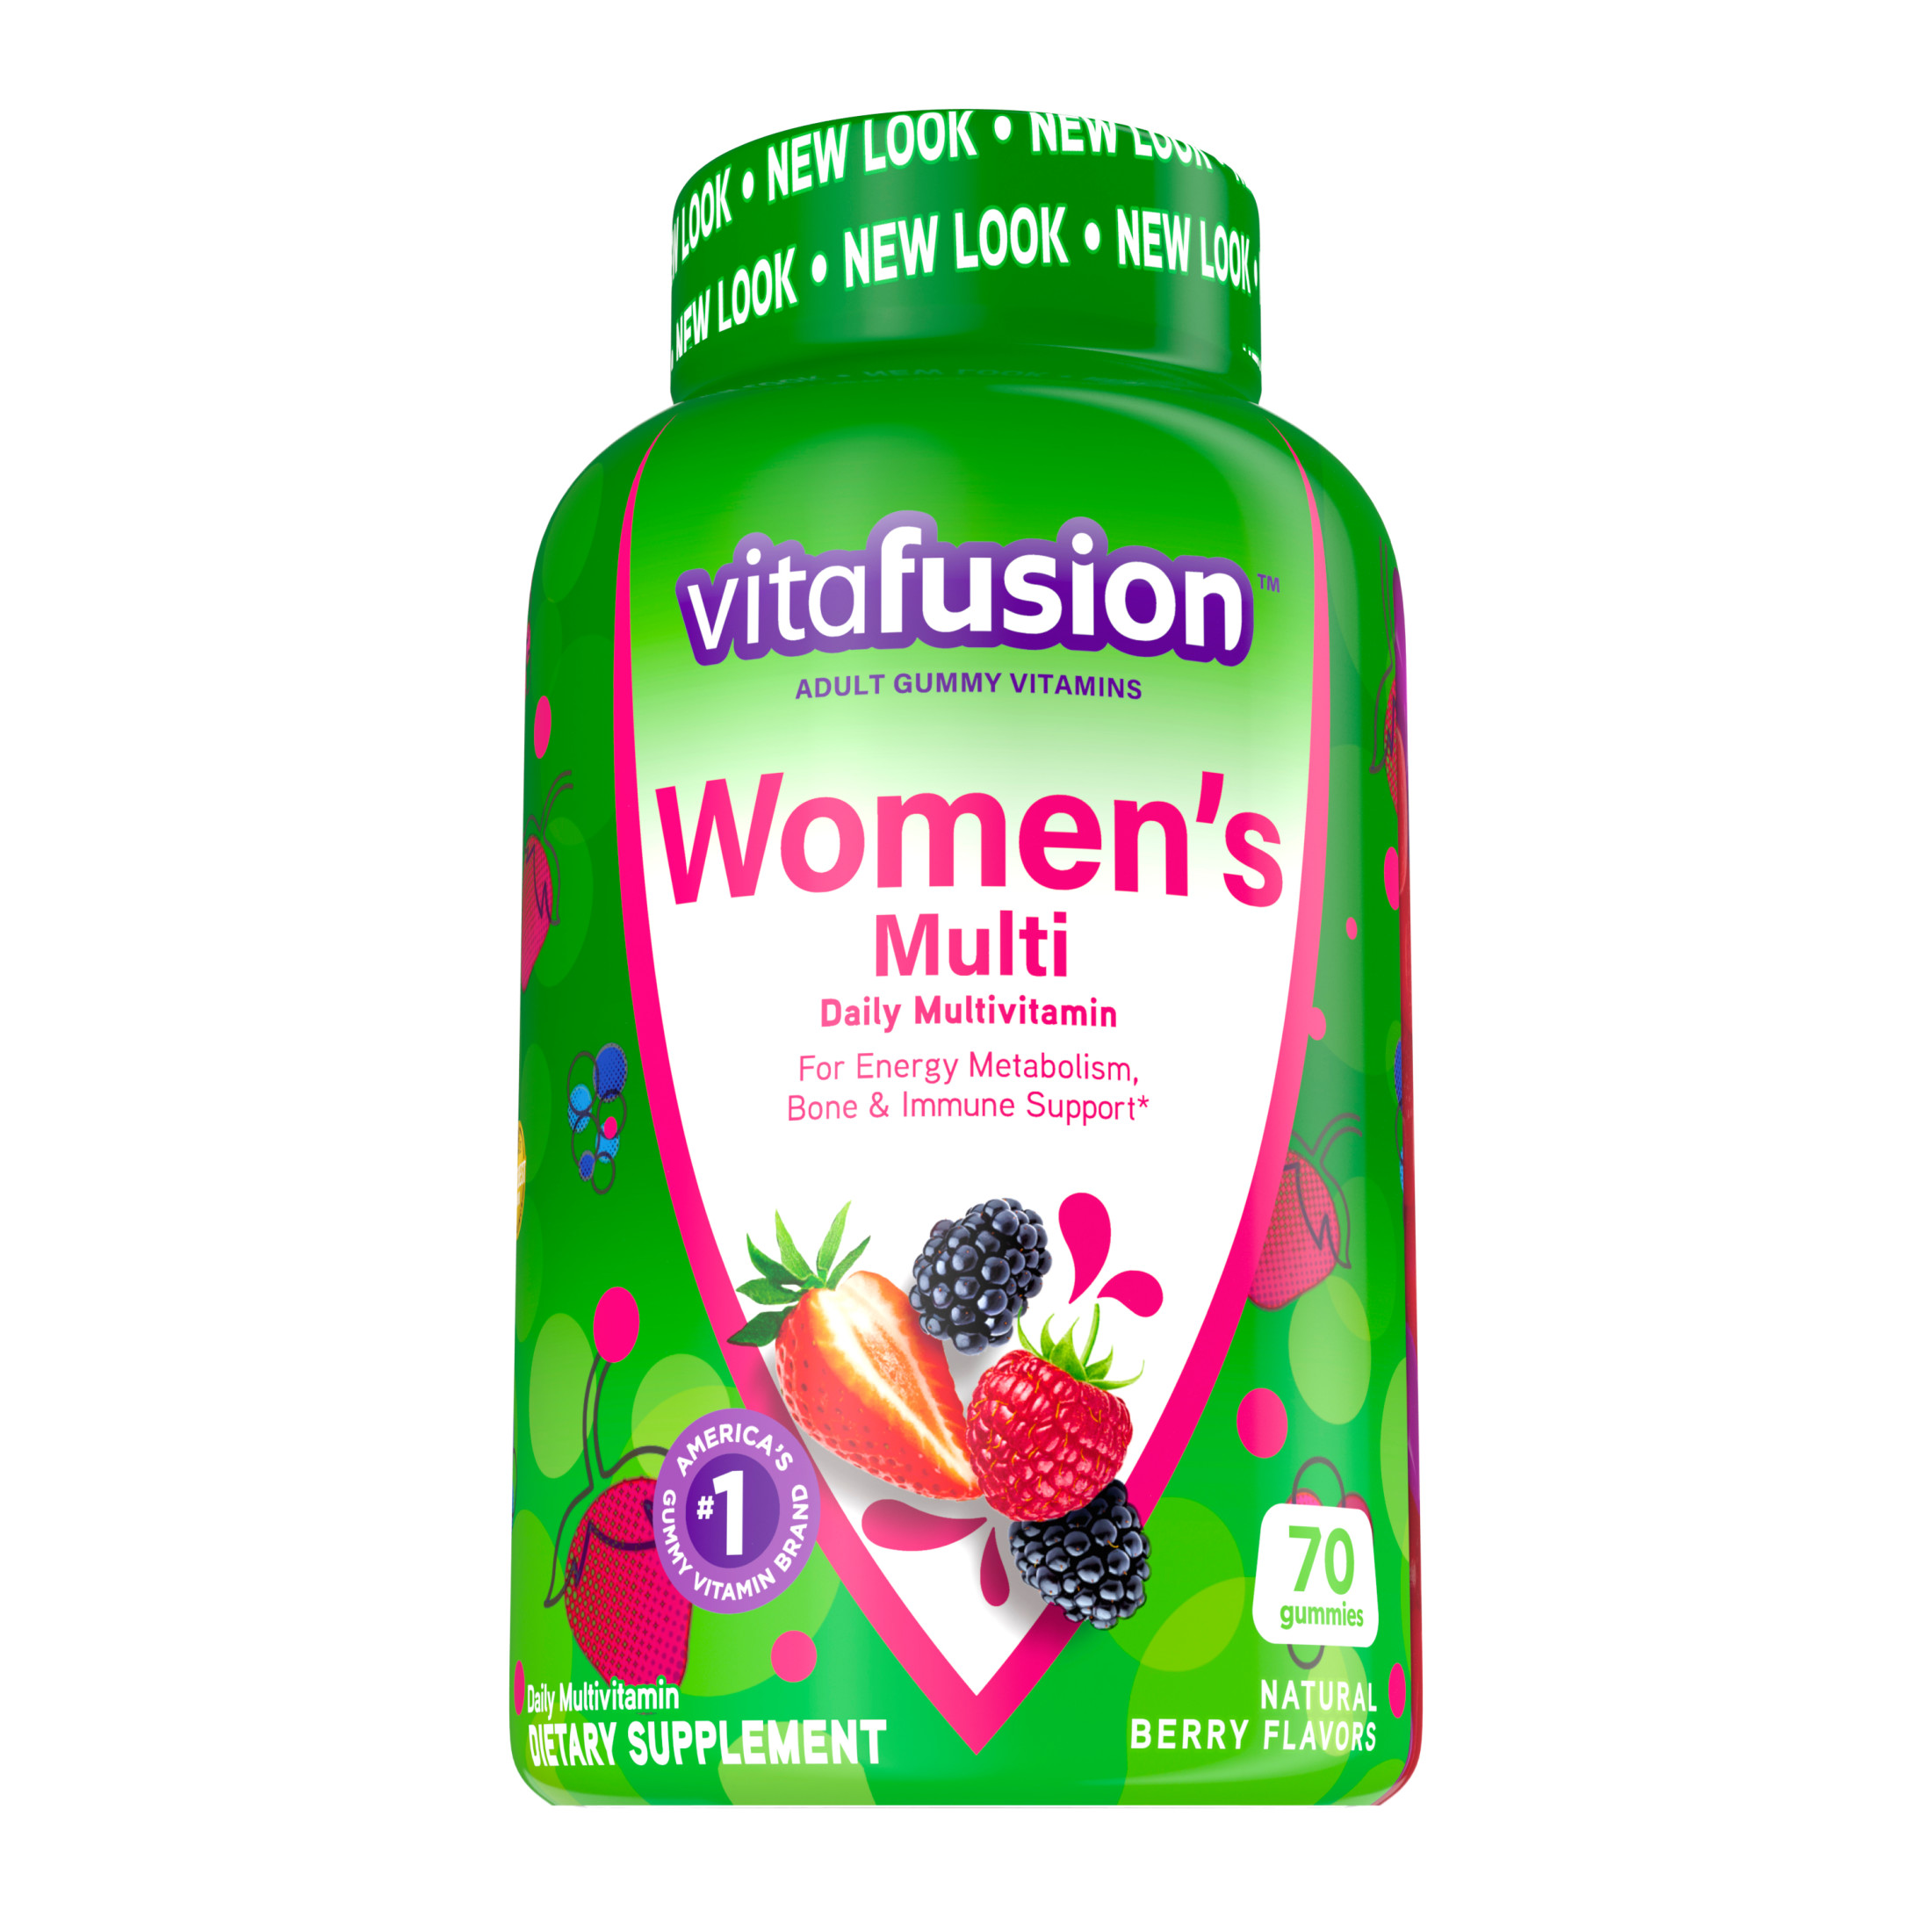 vitafusion Women’s Daily Gummy Multivitamin: vitamin C & E, Delicious Berry Flavors, 70ct (35 day supply), from Vitafusion, the gummy vitamin experts. - image 1 of 9